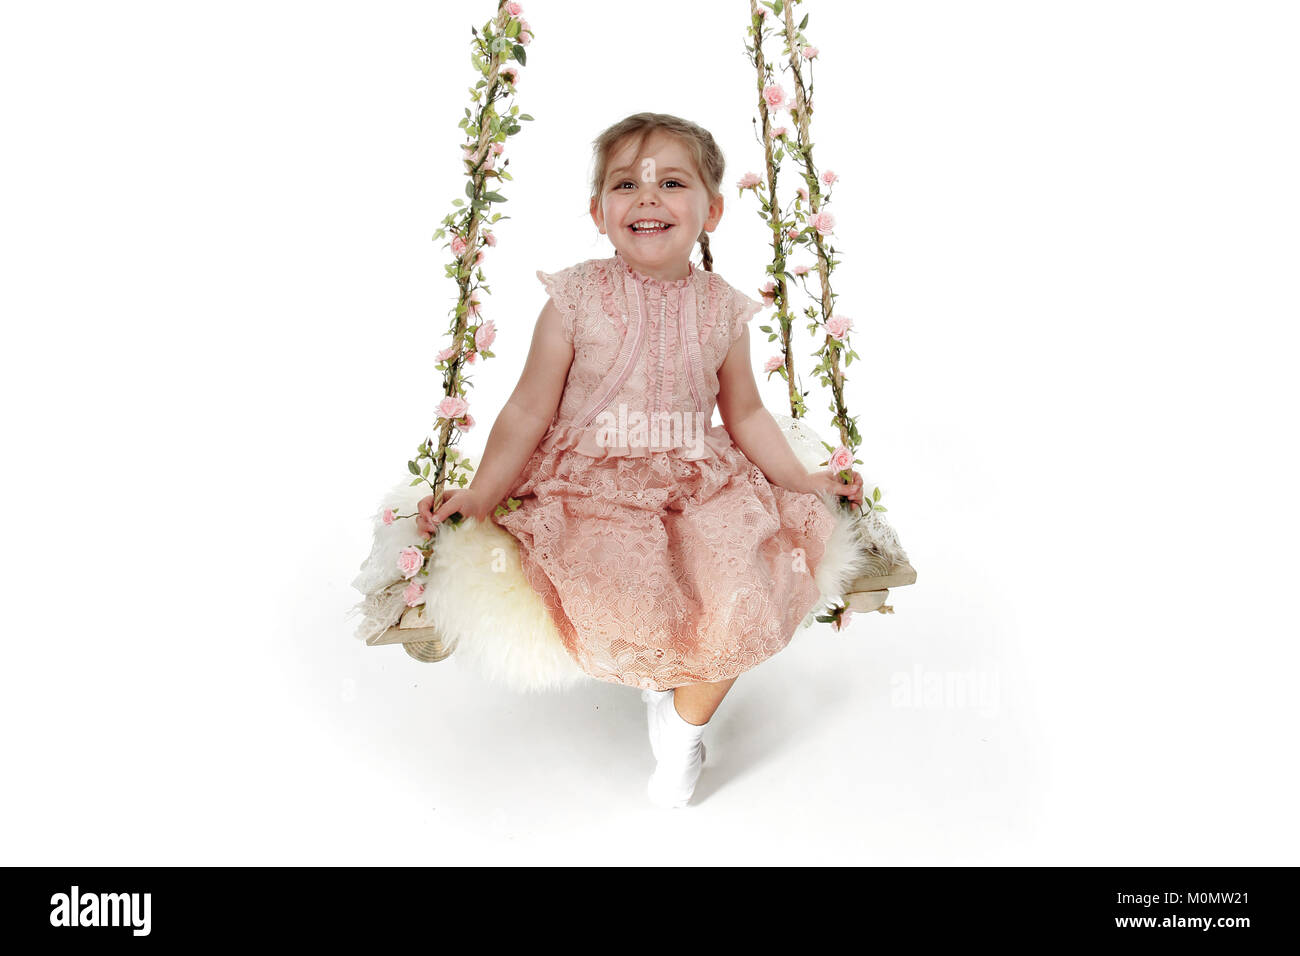 4 year old girl in pink dress sitting on decretive swing Stock Photo